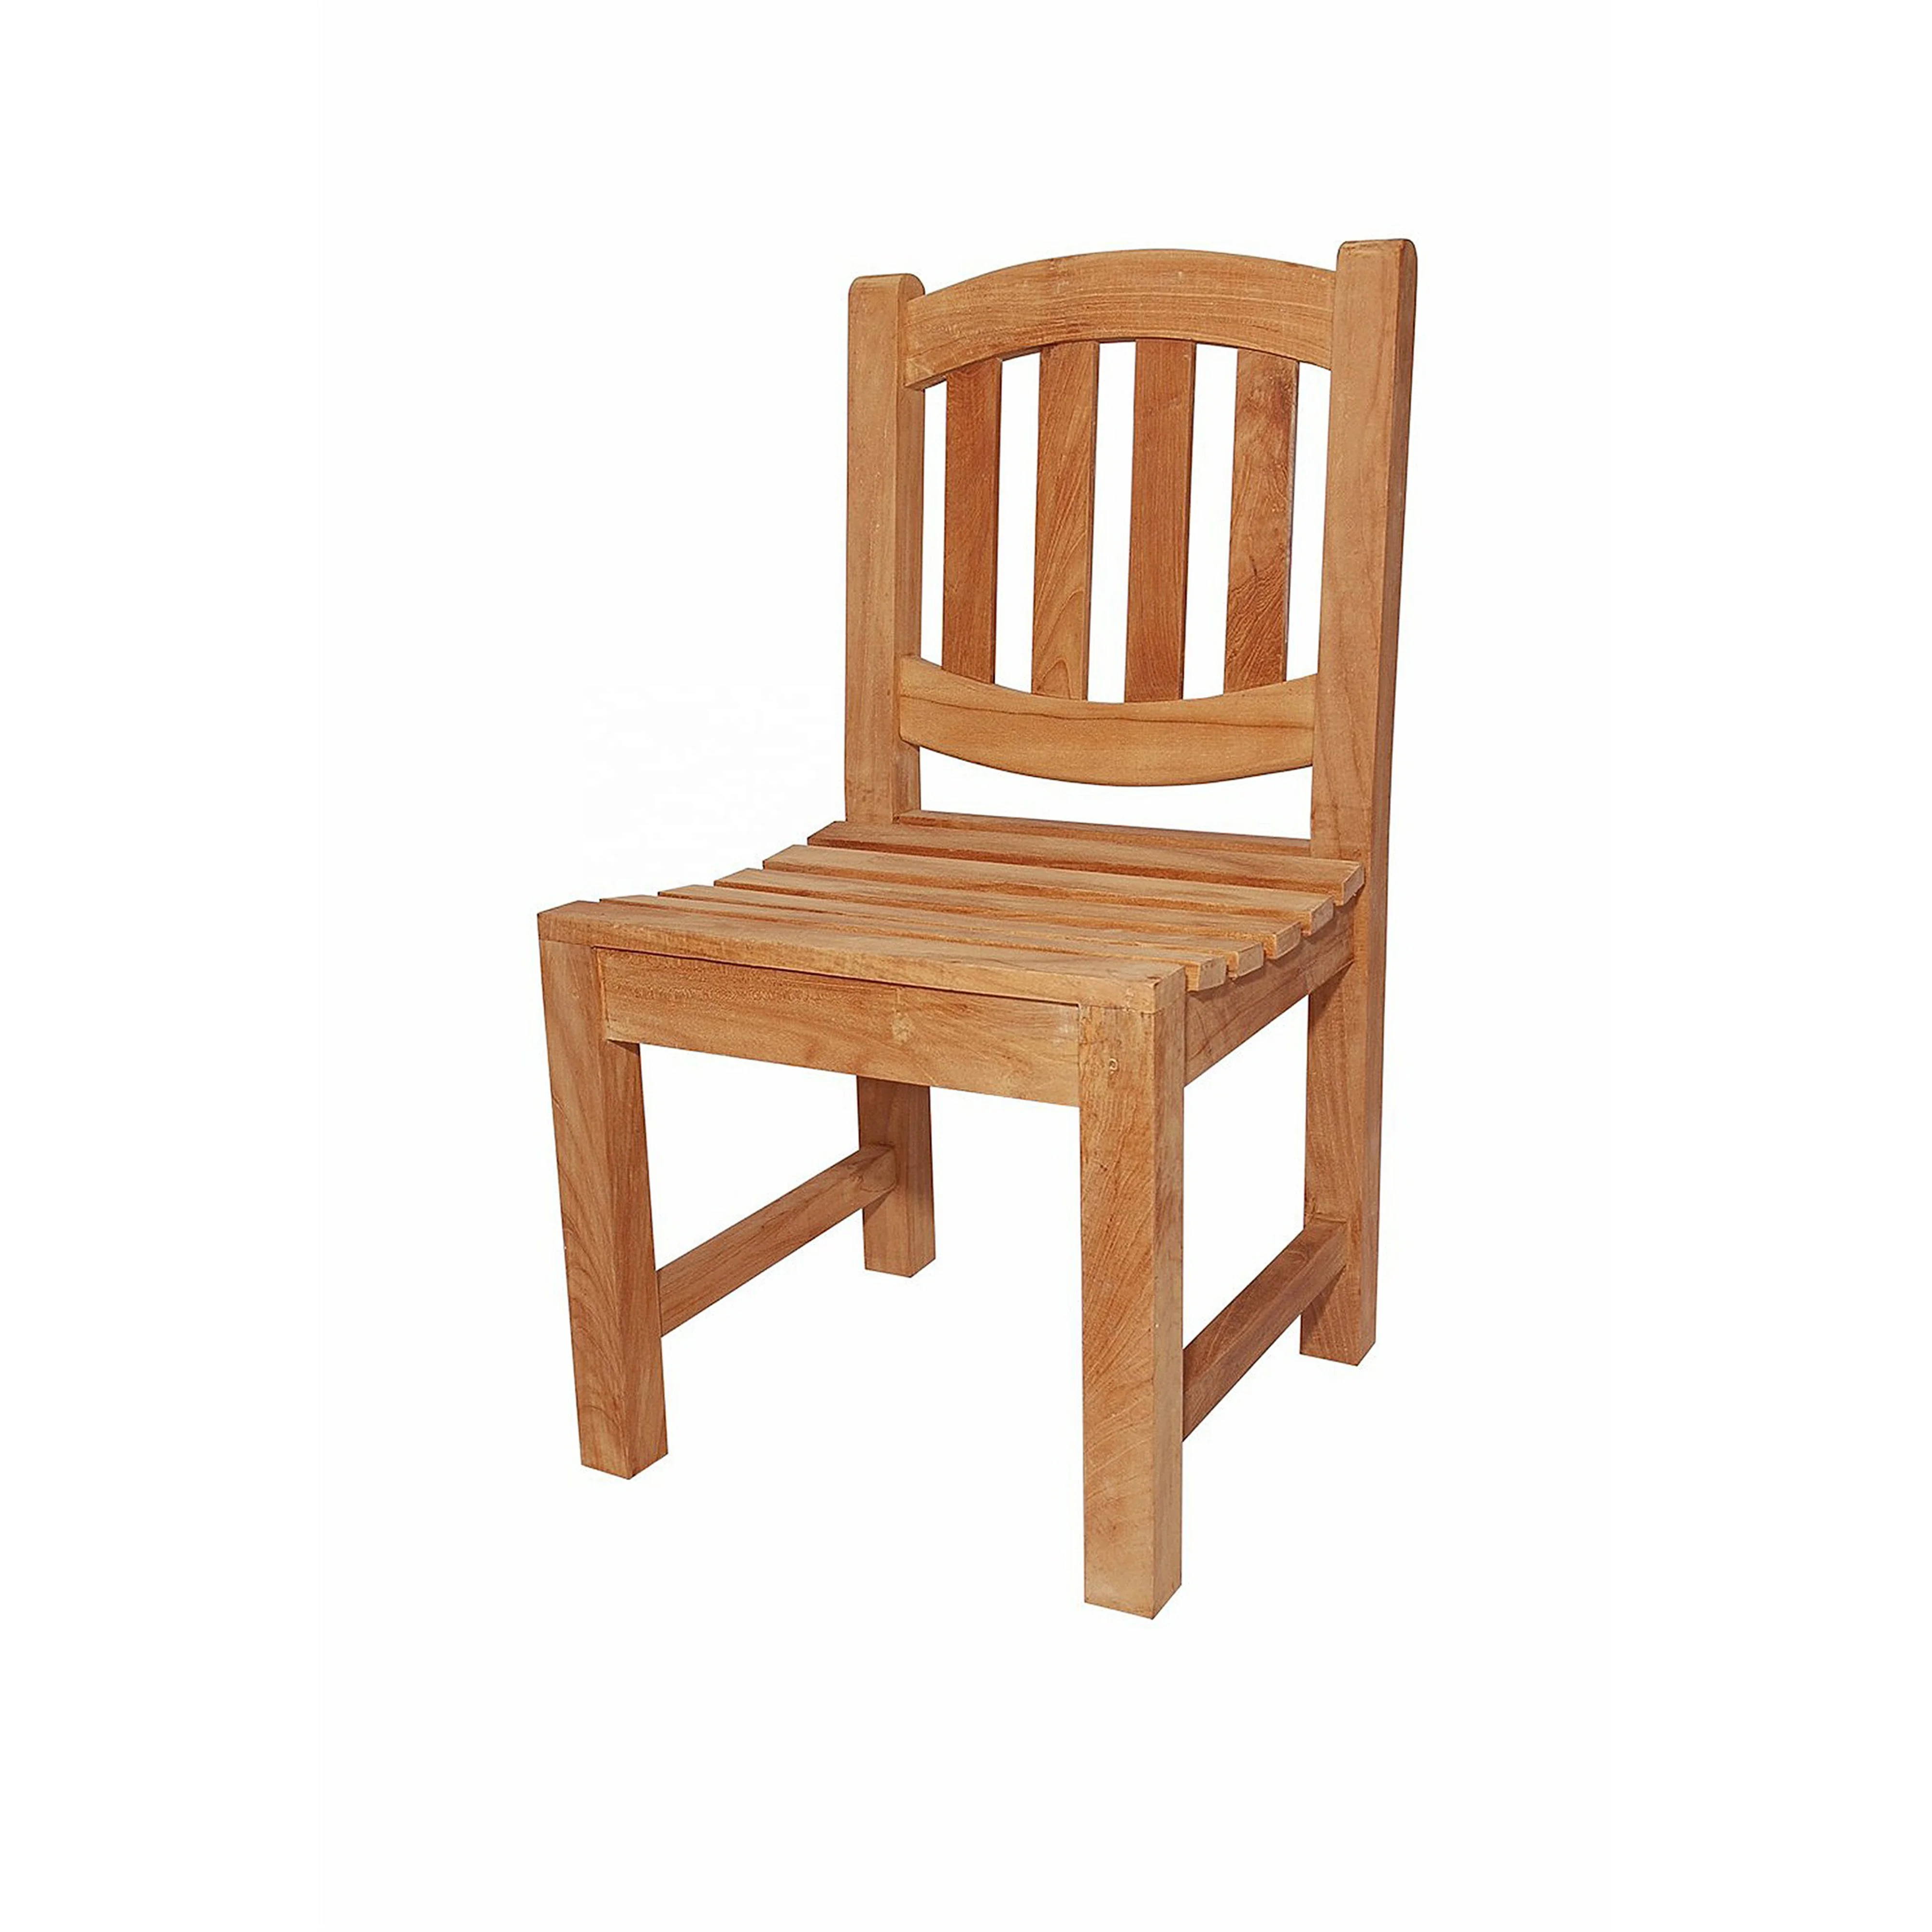 Деревянный деревенский стул